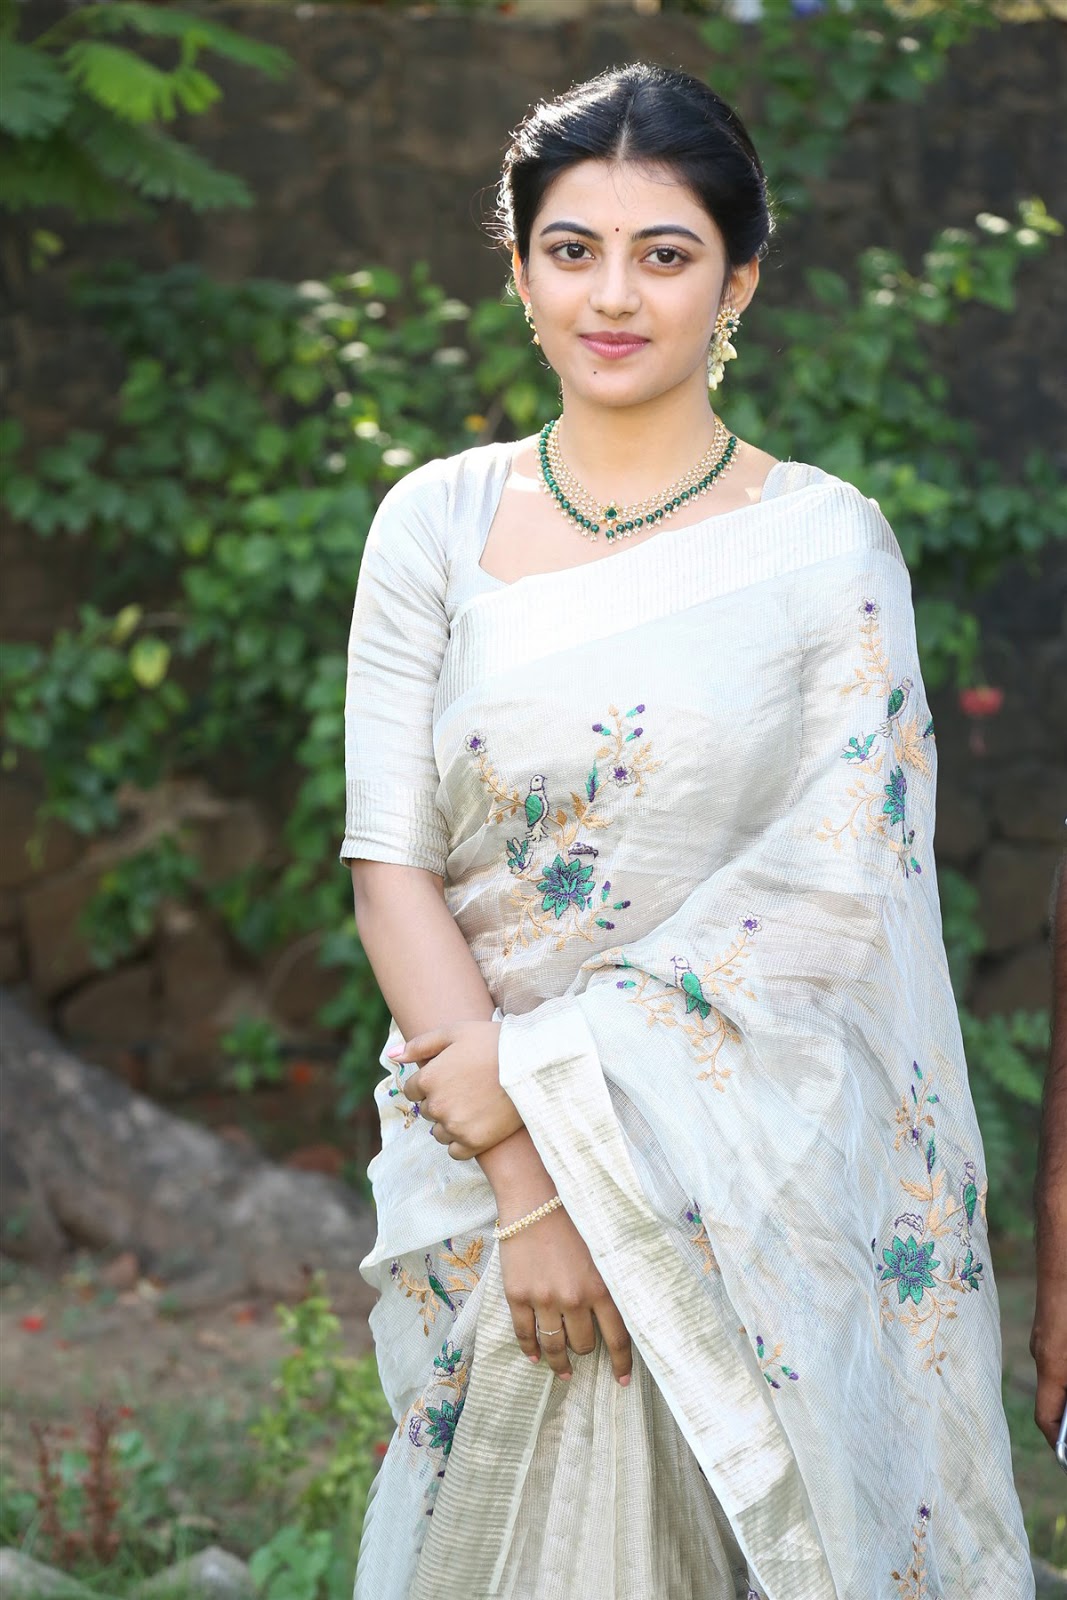 Actress Anandhi Gorgeous in Saree Photos | CineHub